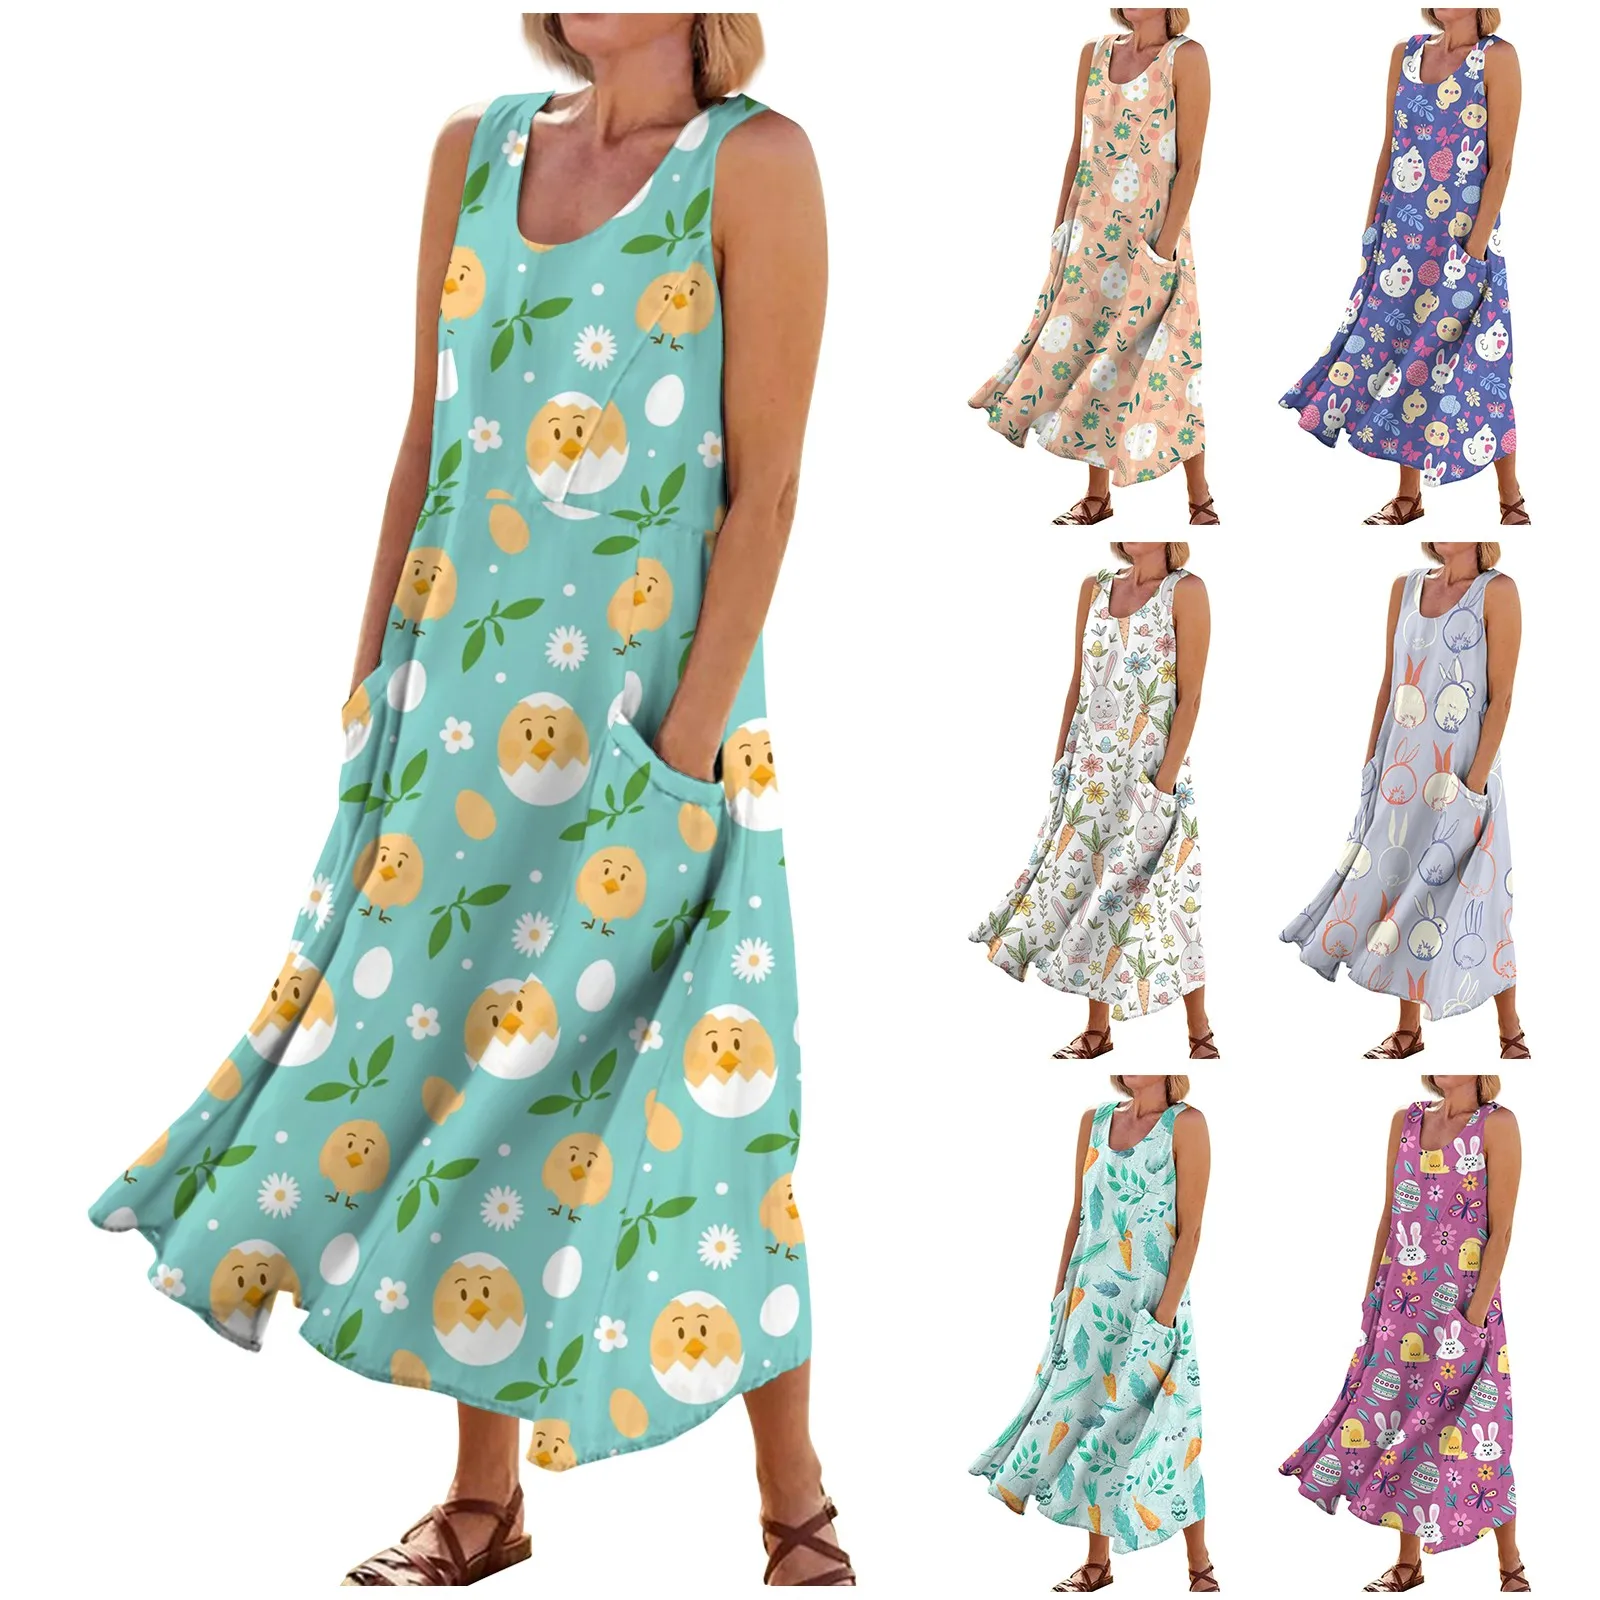 

Women Casual Summer Printed Tank Sleeveless Dress Hollow Out Loose Beach Dress New Slim-Type Elegant Dresses فساتين السهرة